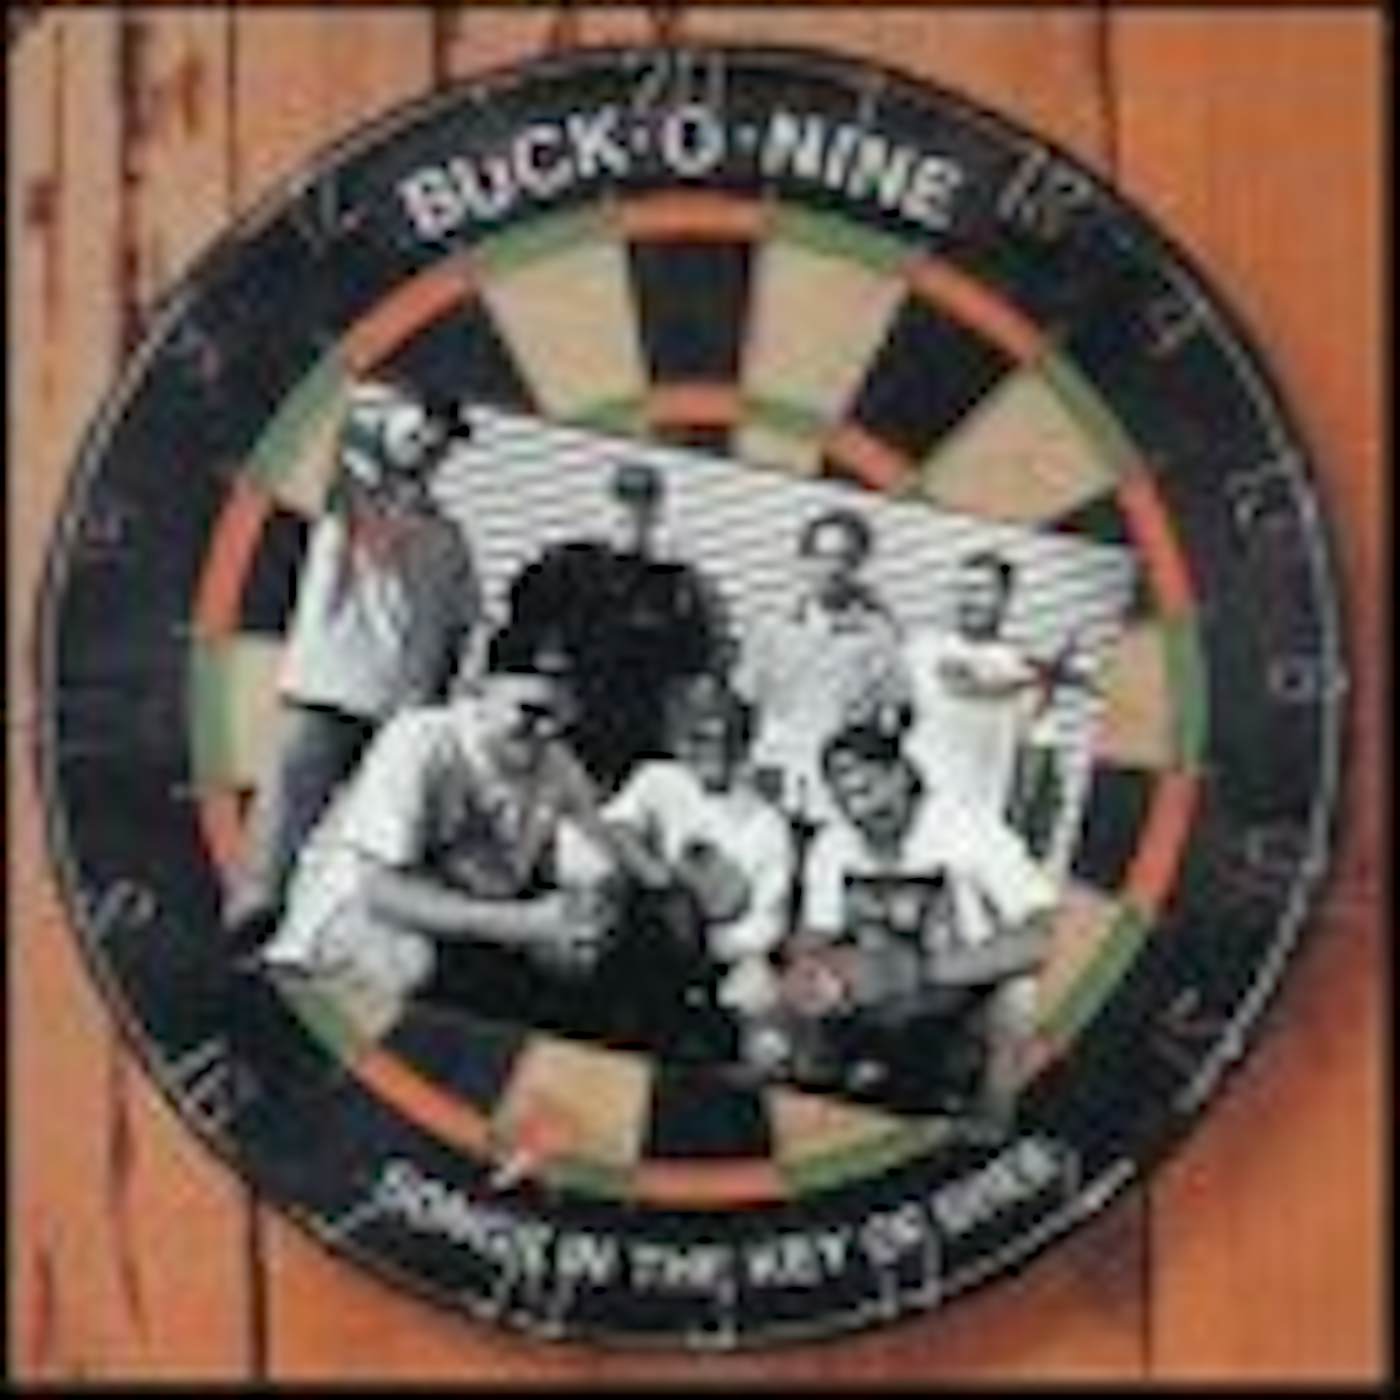 Buck-O-Nine Songs In The Key Of Bree Vinyl Record